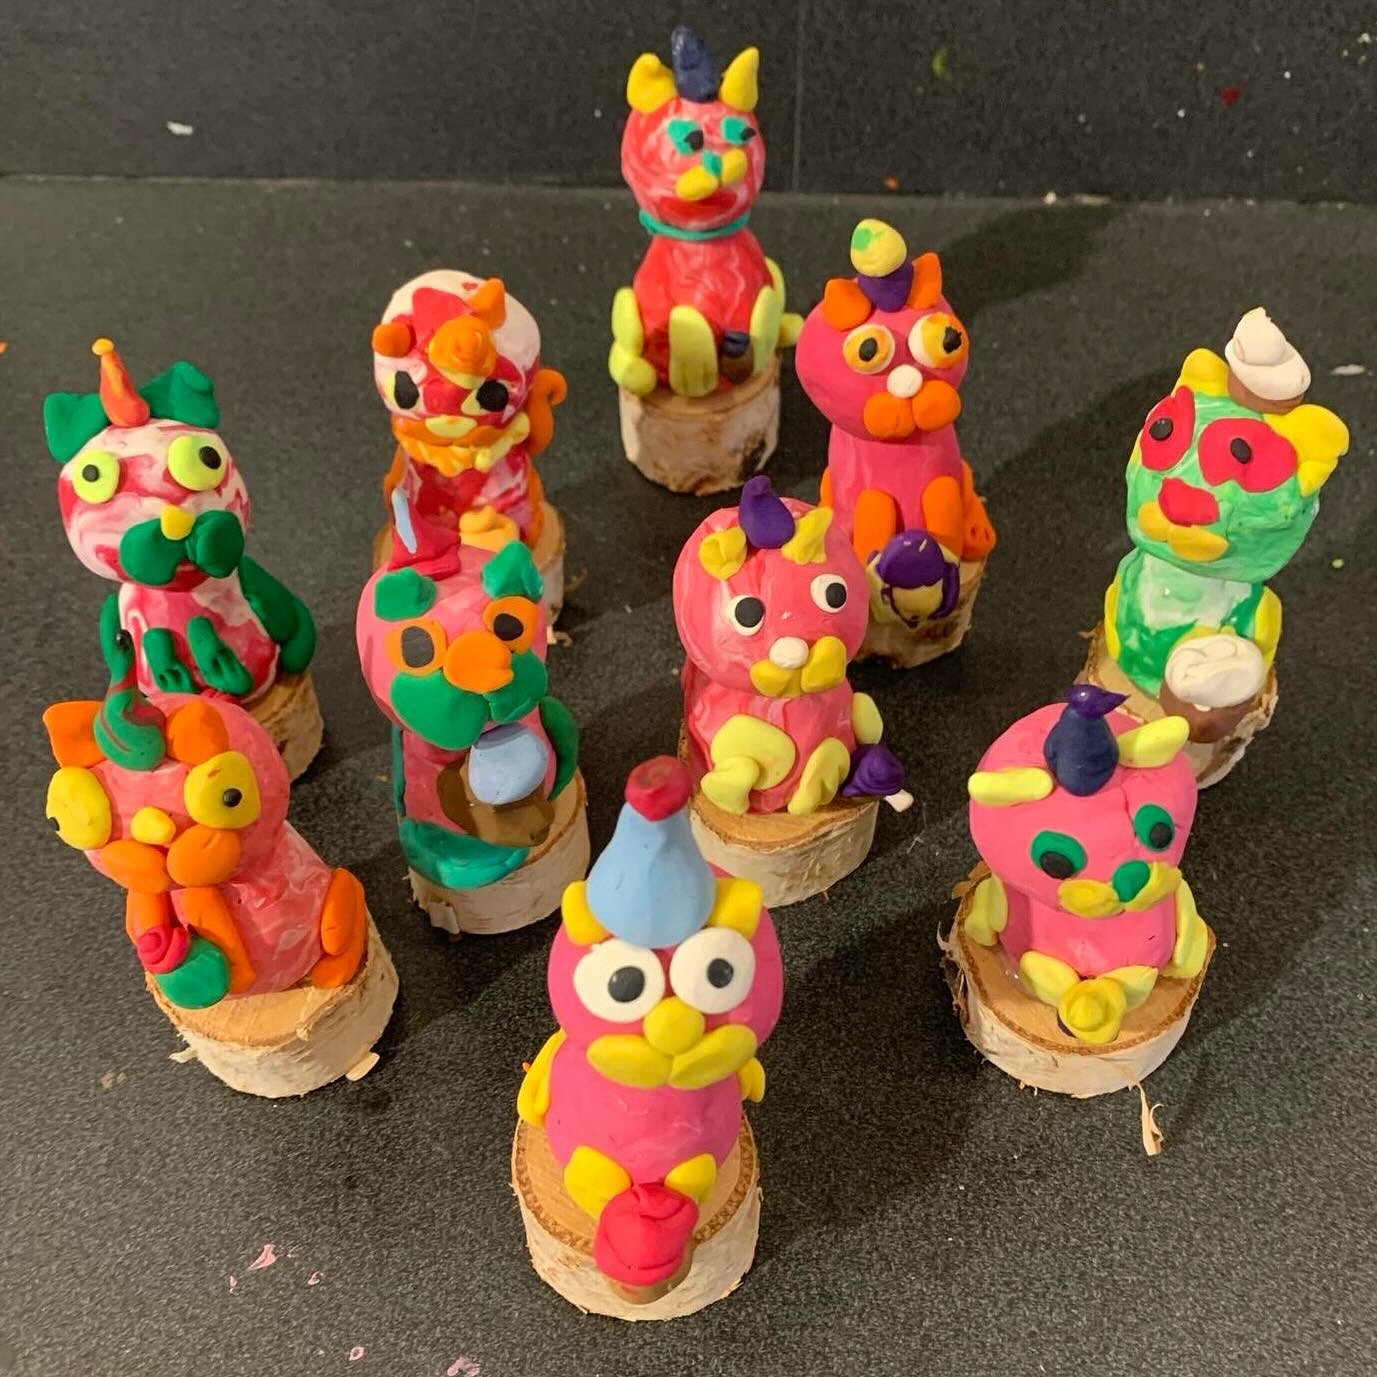 Happy 6th birthday, Avery! We loved making colourful cat sculptures with you and your friends!

#torontokids #torontokidart #torontokidartist #torontokidsart #kidscreate #creativekids
 
#freehandart #torontoartschool
 
#torontoartclassesforkids #toro